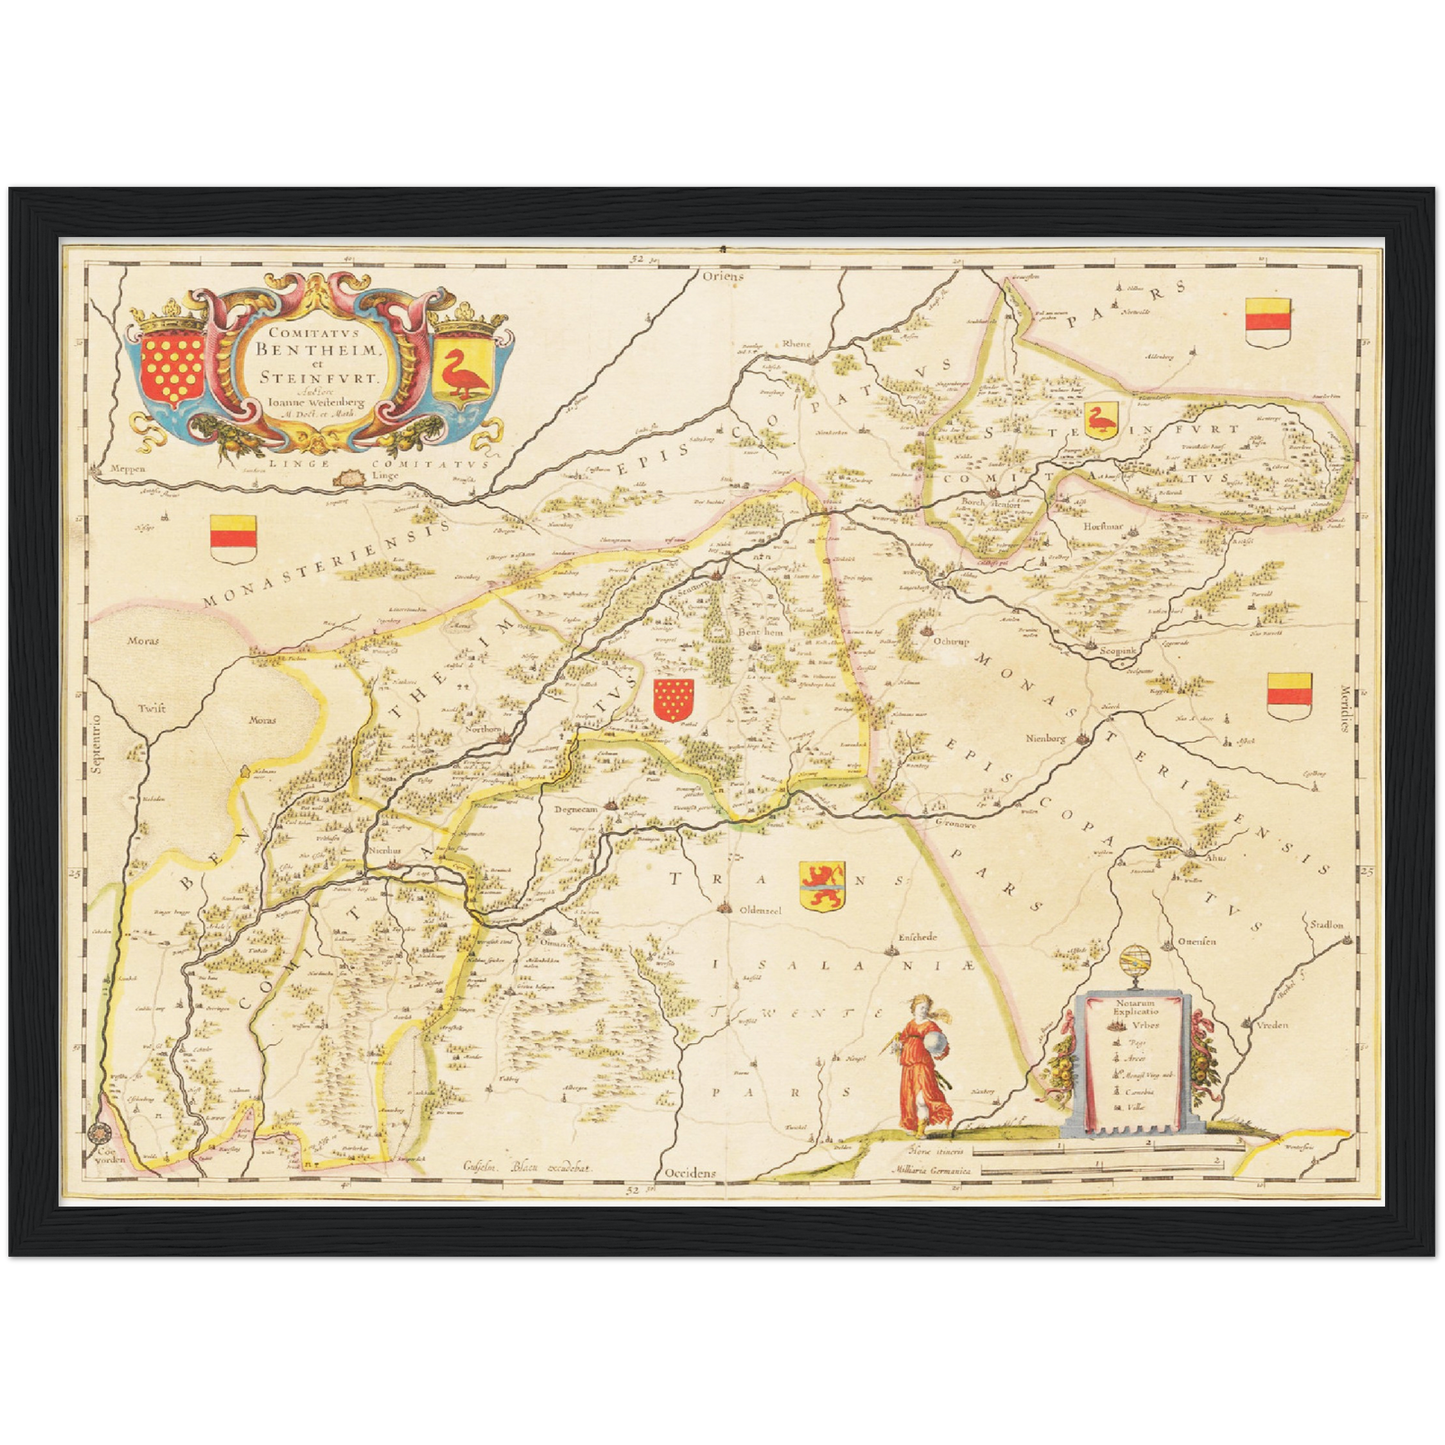 Historische Landkarte Grafschaft Bentheim um 1635